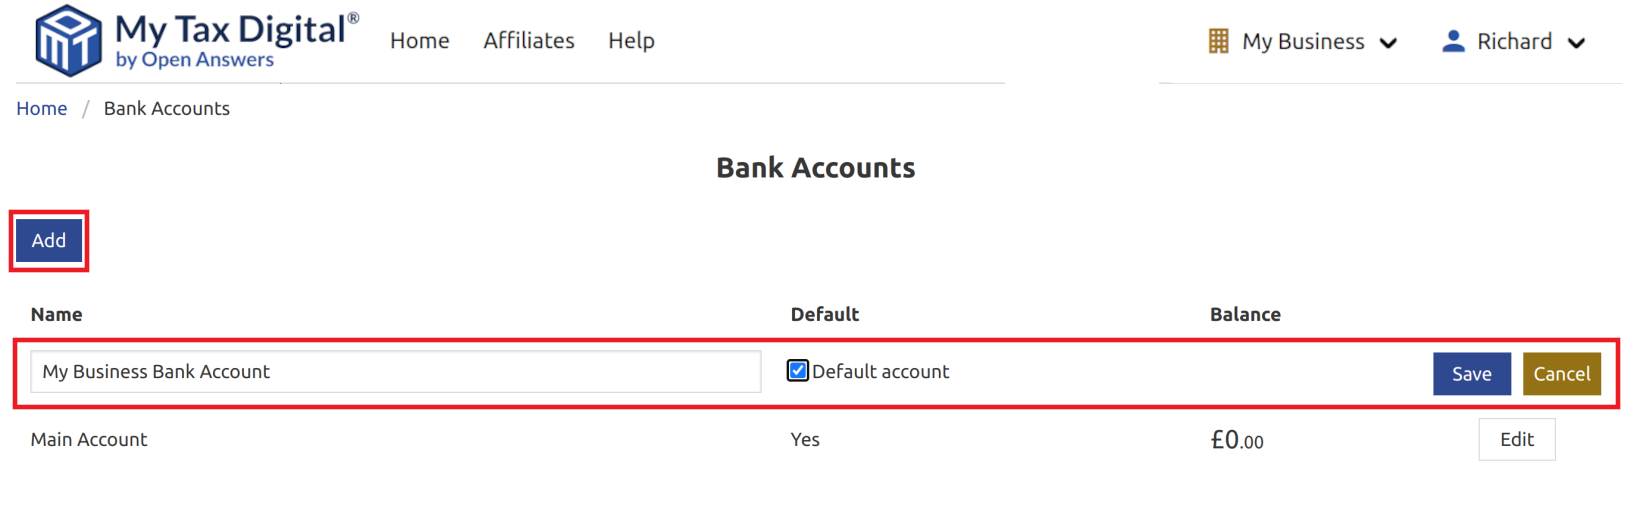 My Tax Digital Adding Bank Accounts